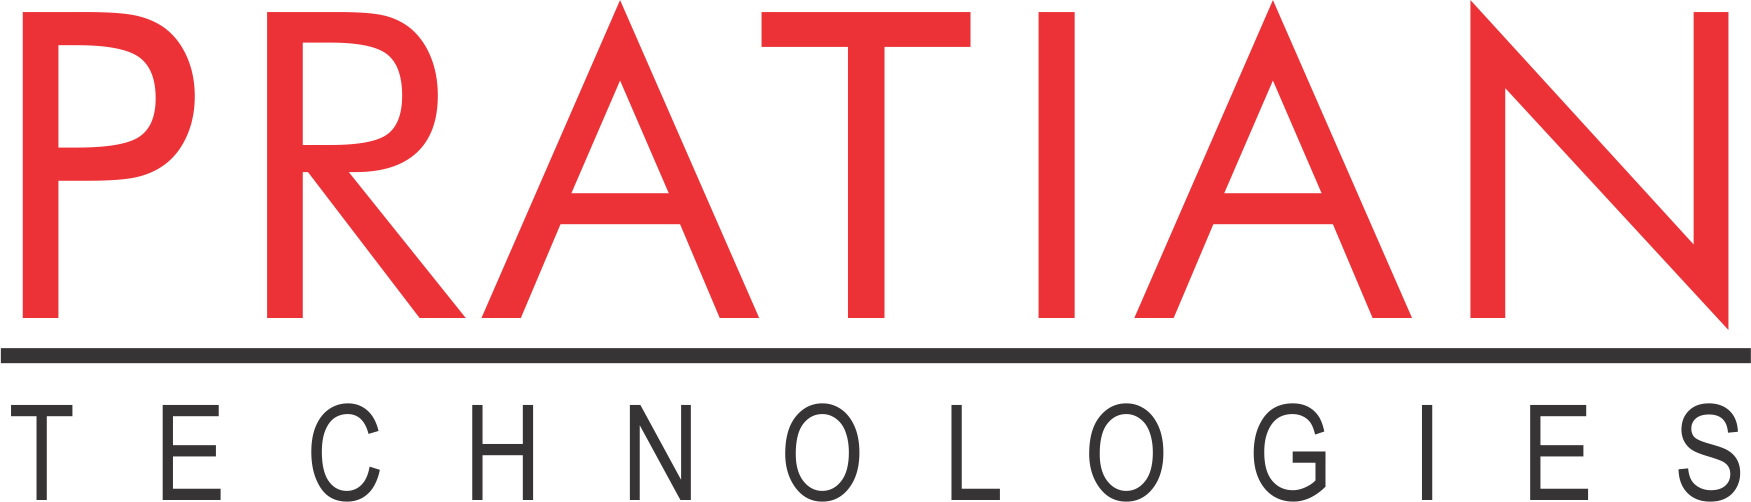 Pratian Technologies Off Campus Drive 2020